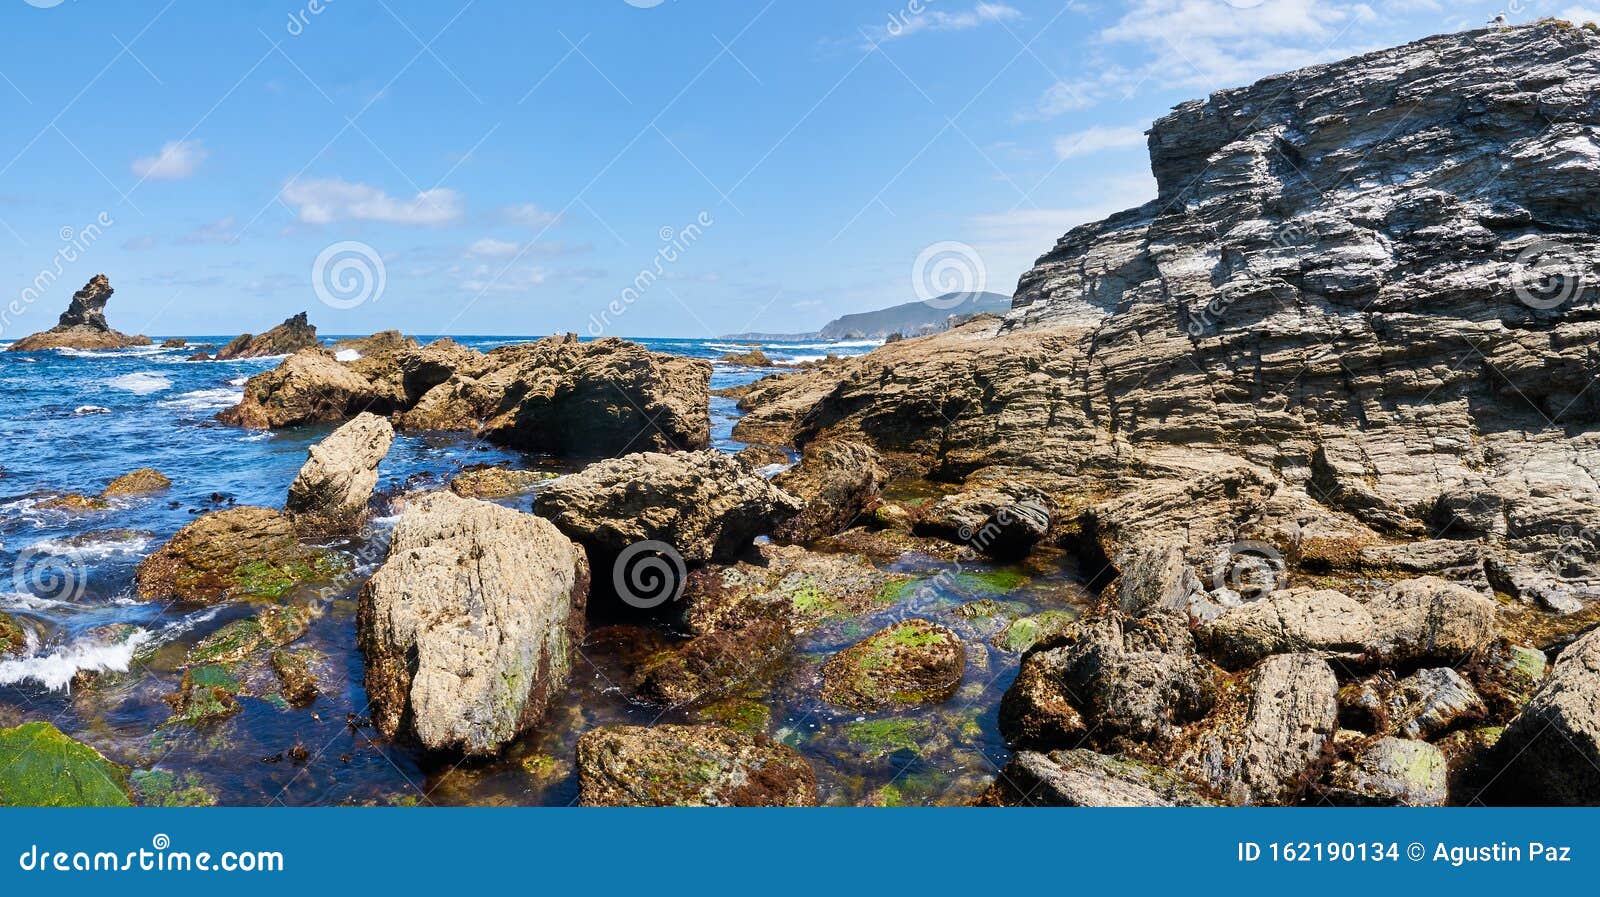 rocks at the seaside in pena furada beach. ortigueira. coruna. spain